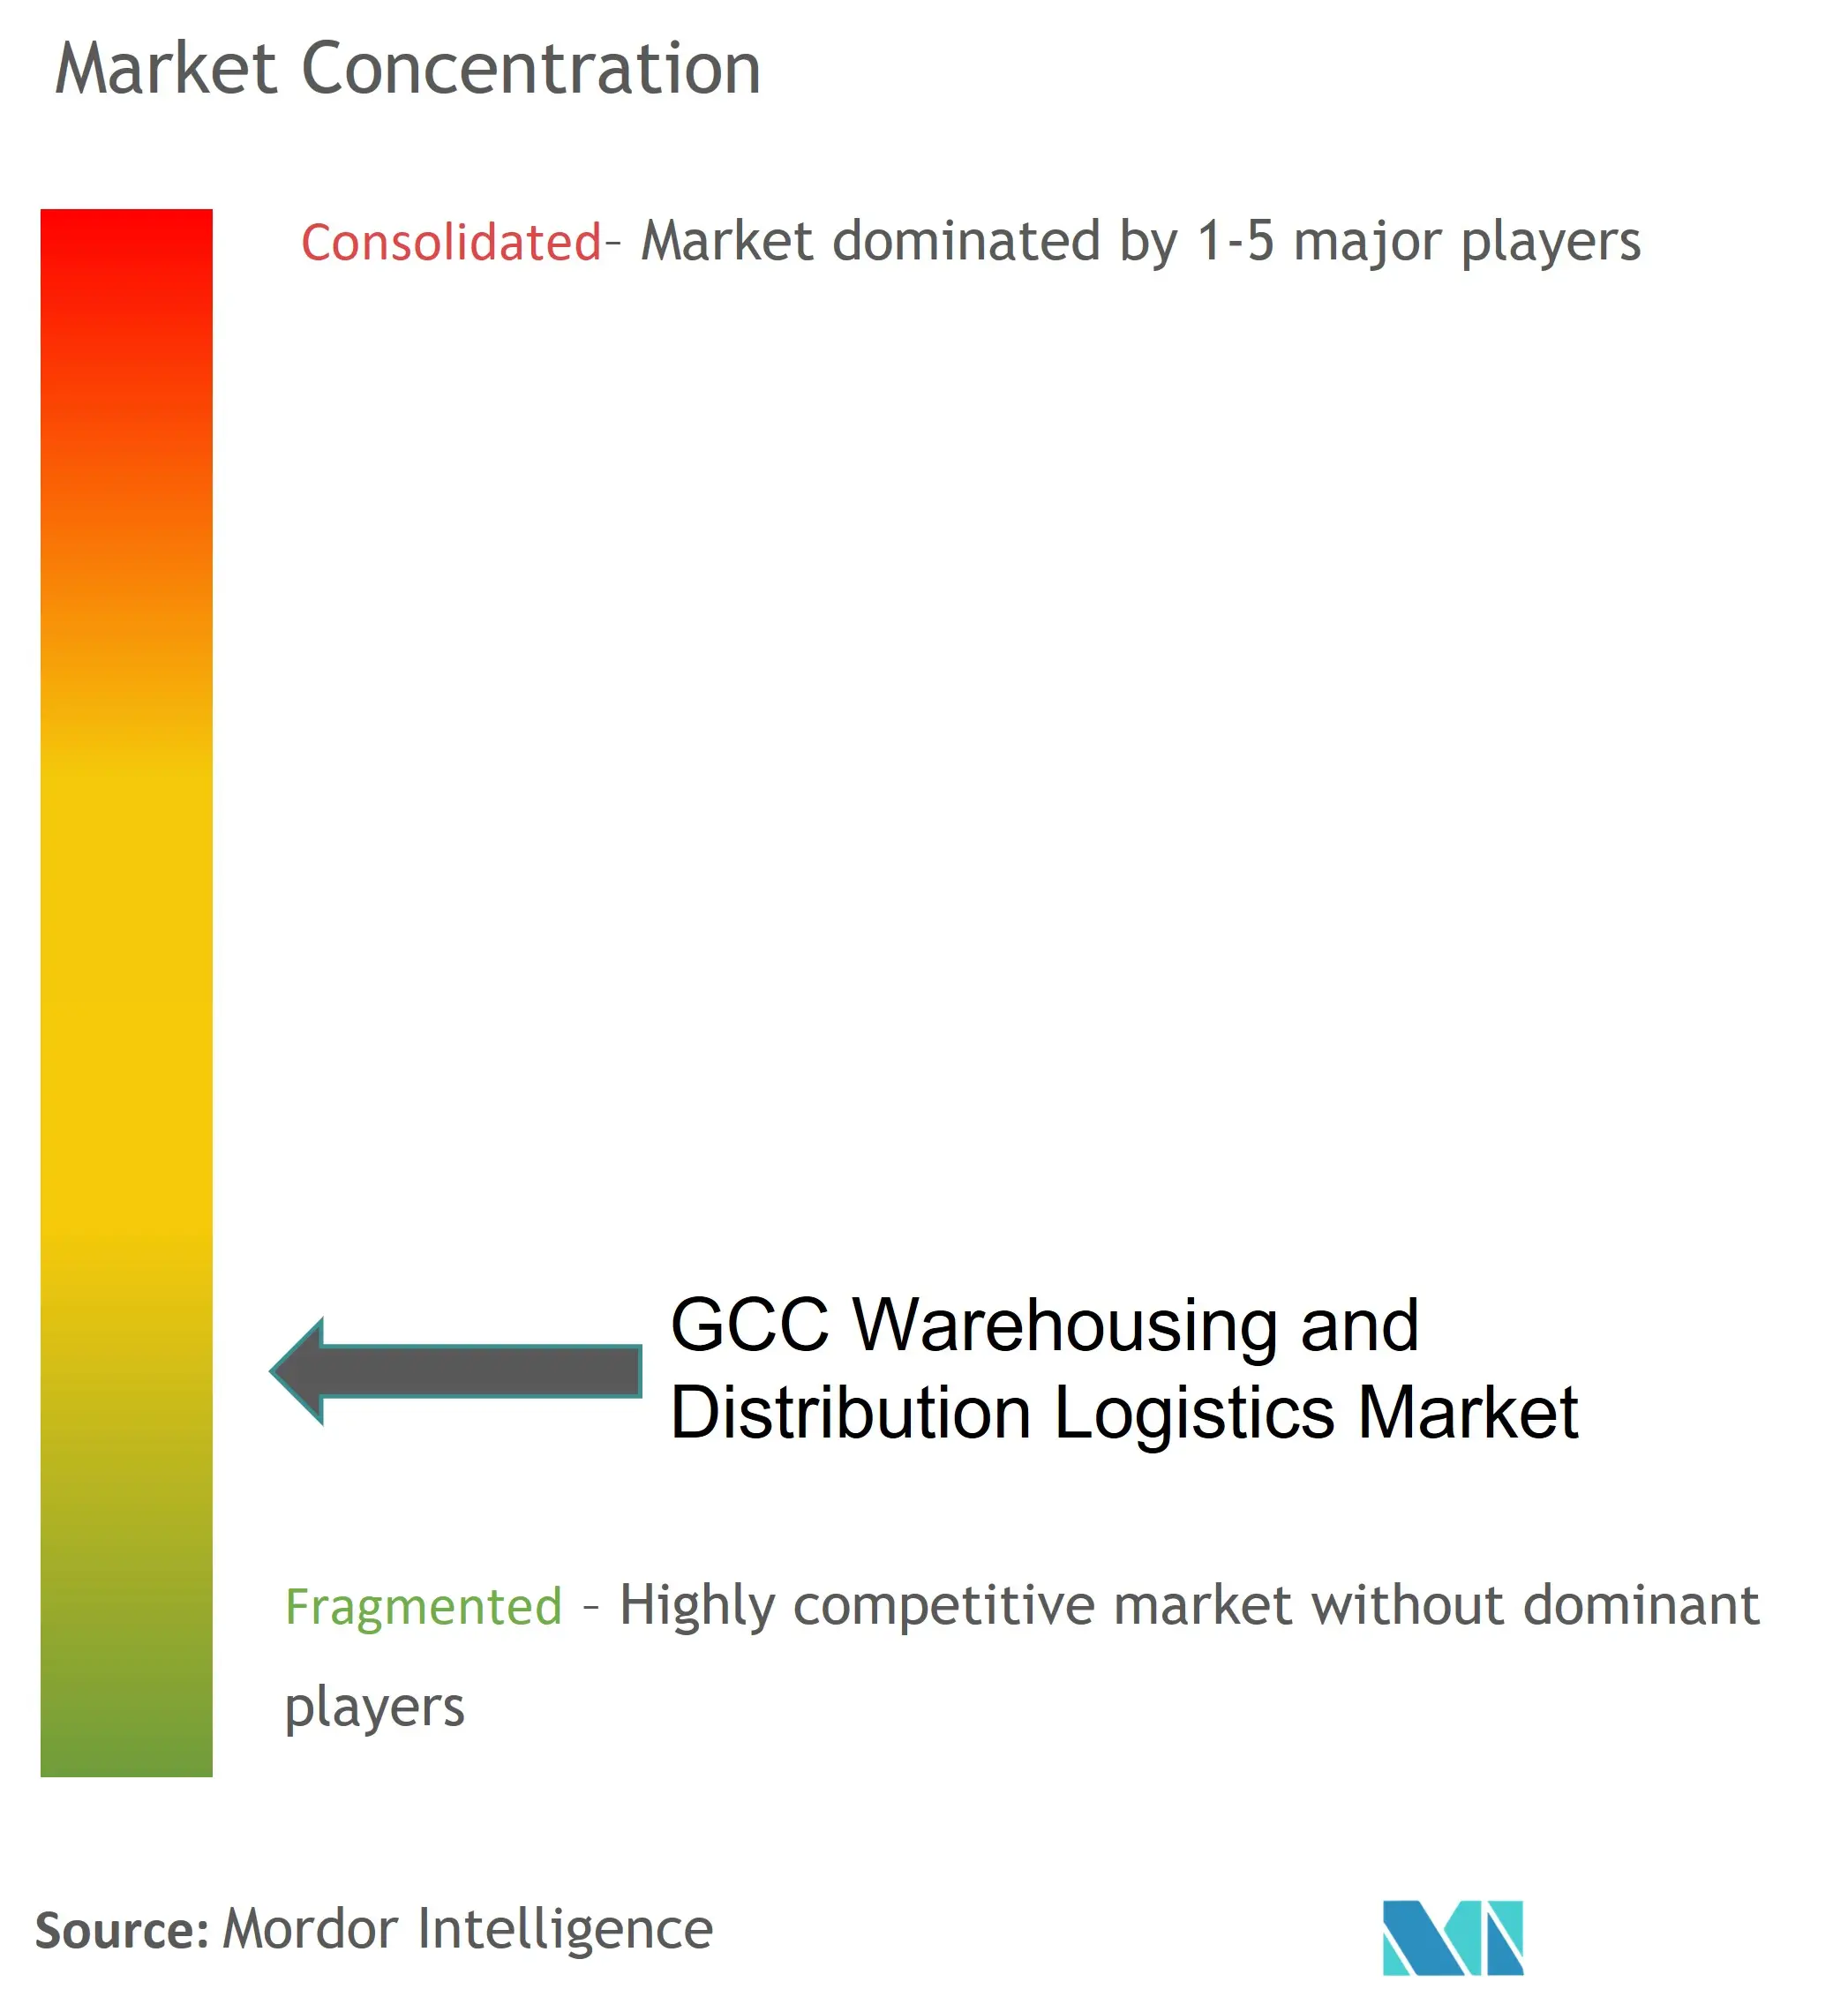 GCC Warehousing and Distribution Logistics Market Concentration